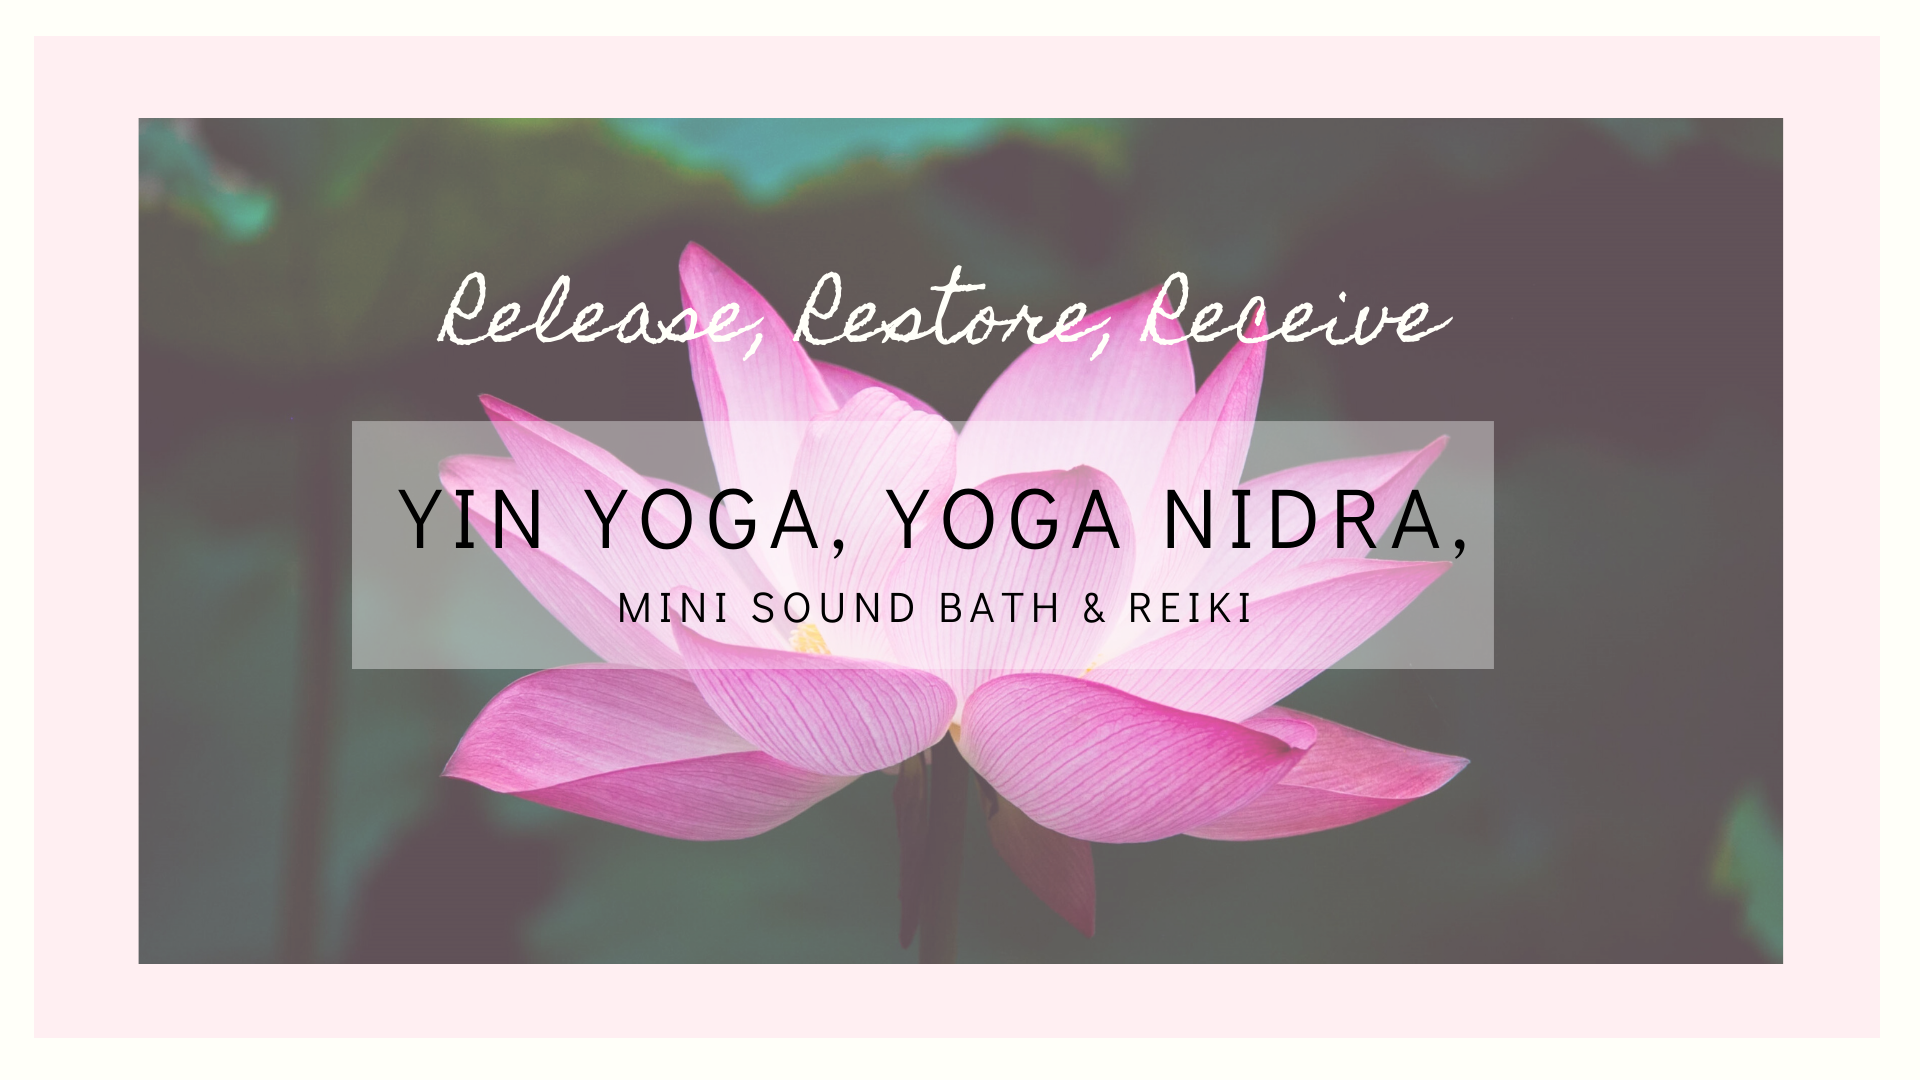 Release, Restore, Receive (Yin Yoga/Yoga Nidra/Sound Bath/Reiki)